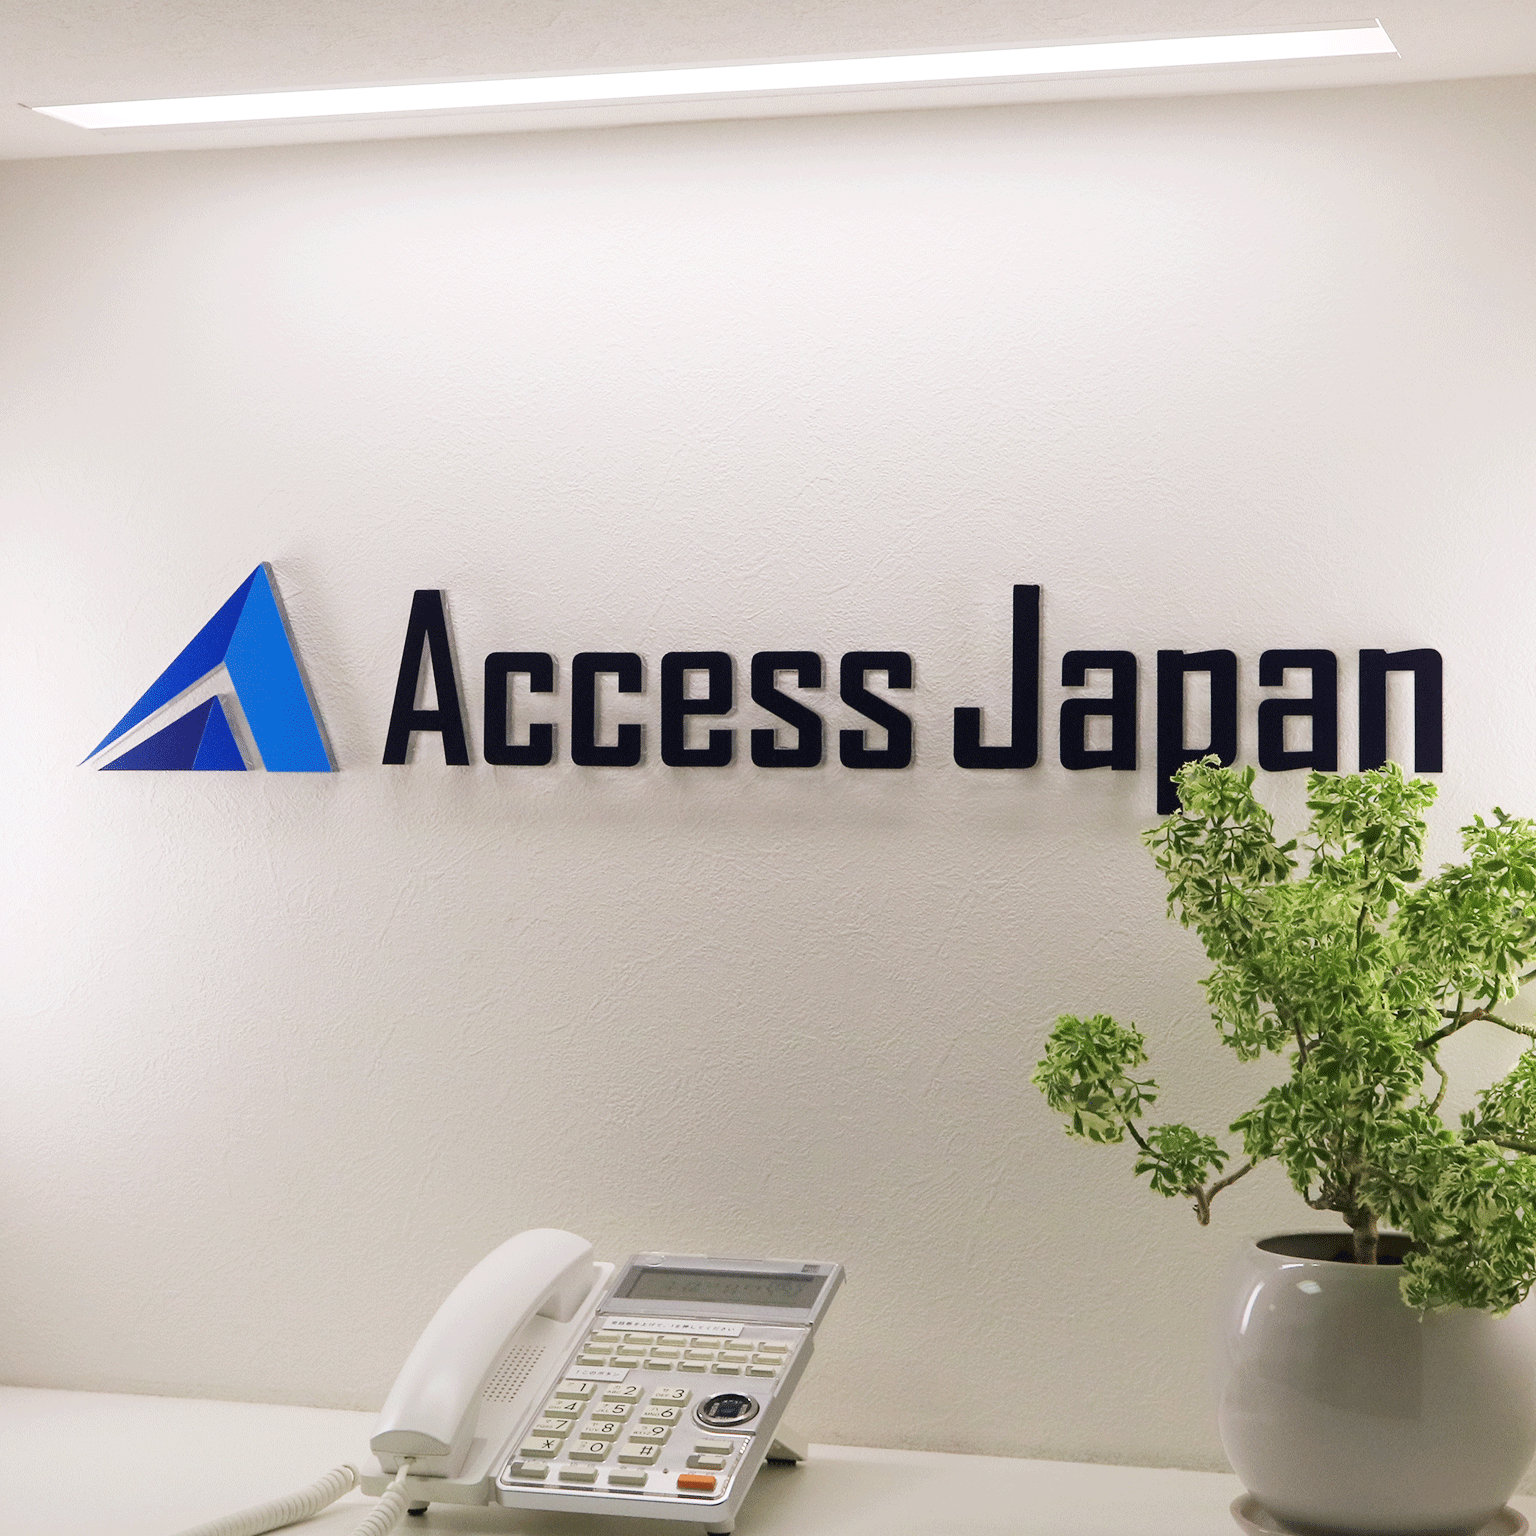 AccessJapanのエントランス